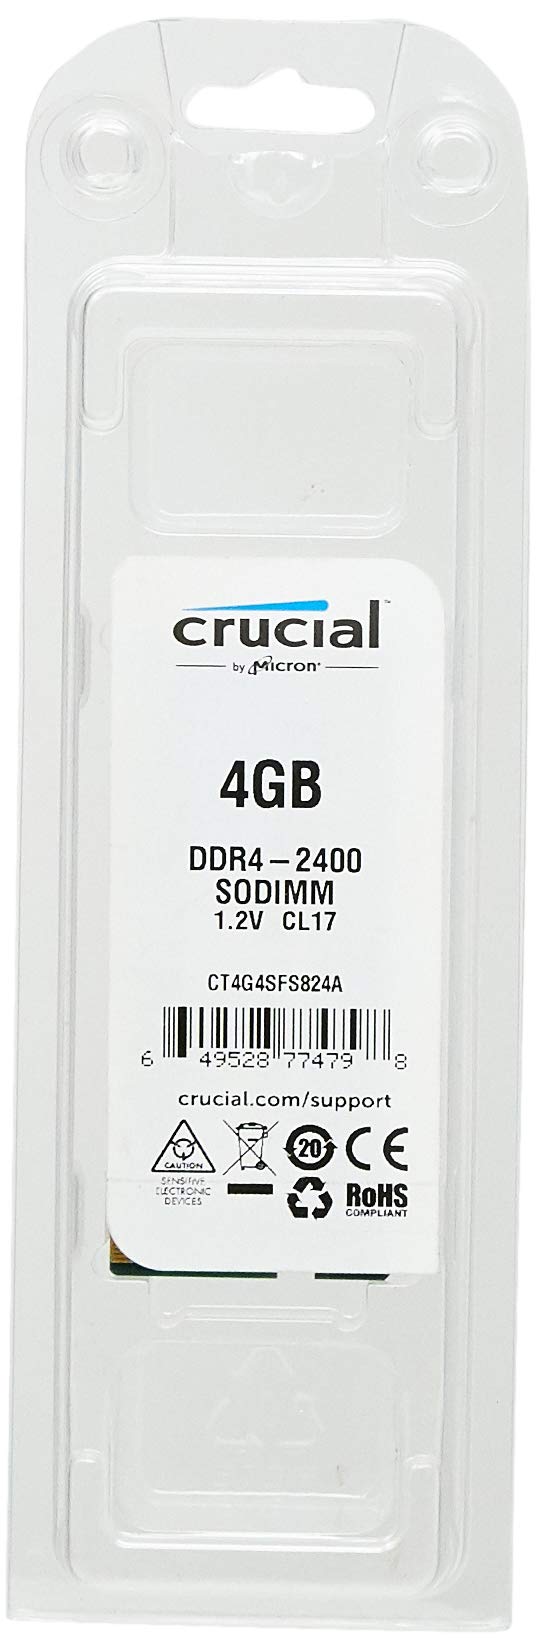 Crucial Single DDR4 (PC4-21300) SR x8 SODIMM 260-Pin Memory